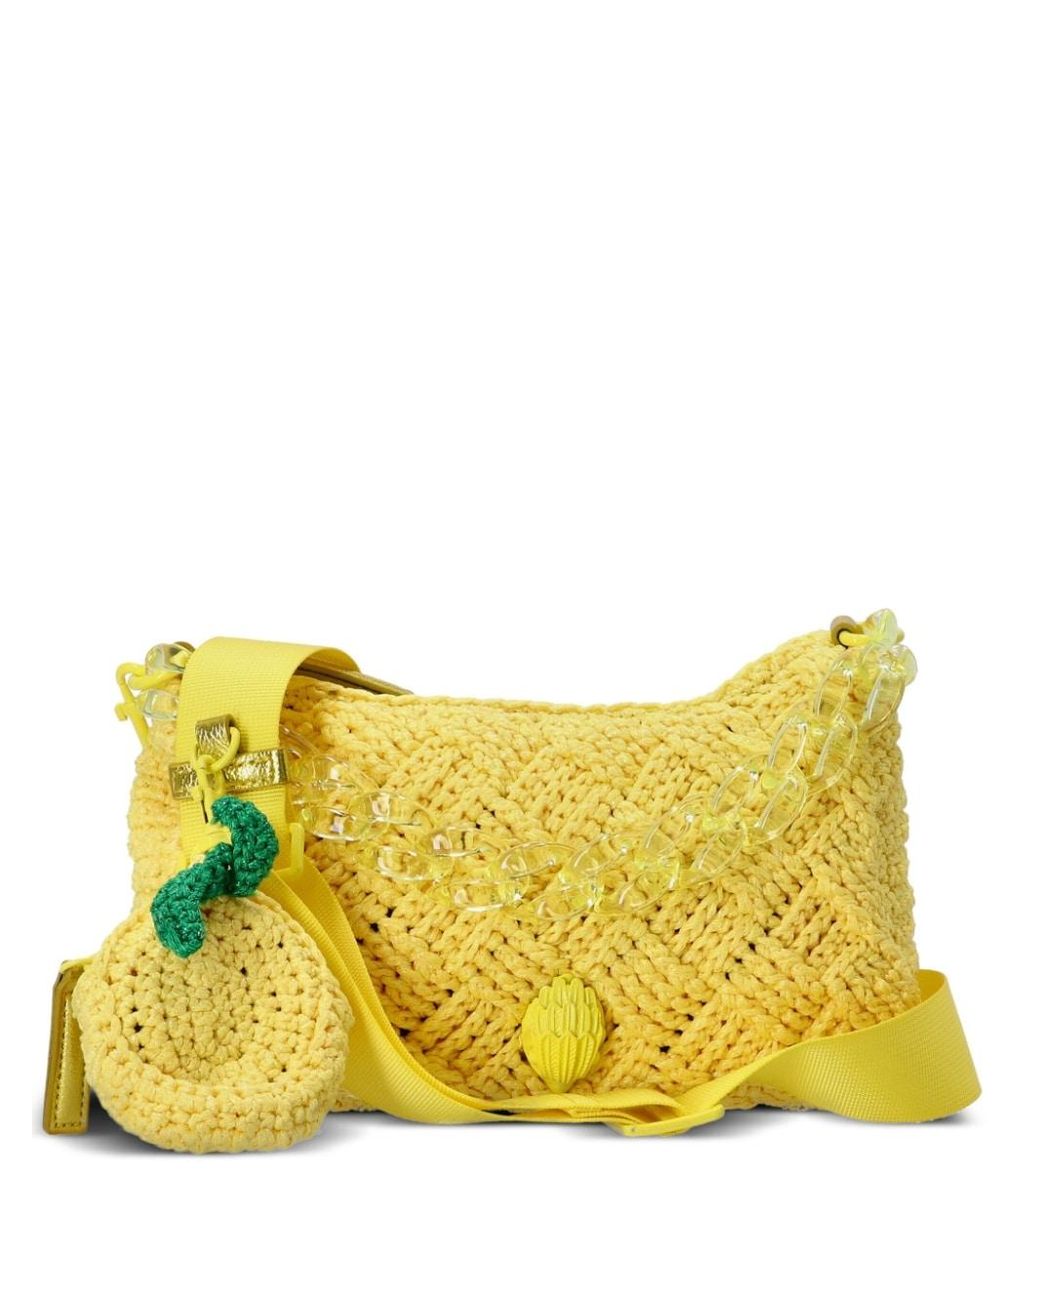 Kurt Geiger Crochet Multi Crossbody Bag in Yellow | Lyst UK